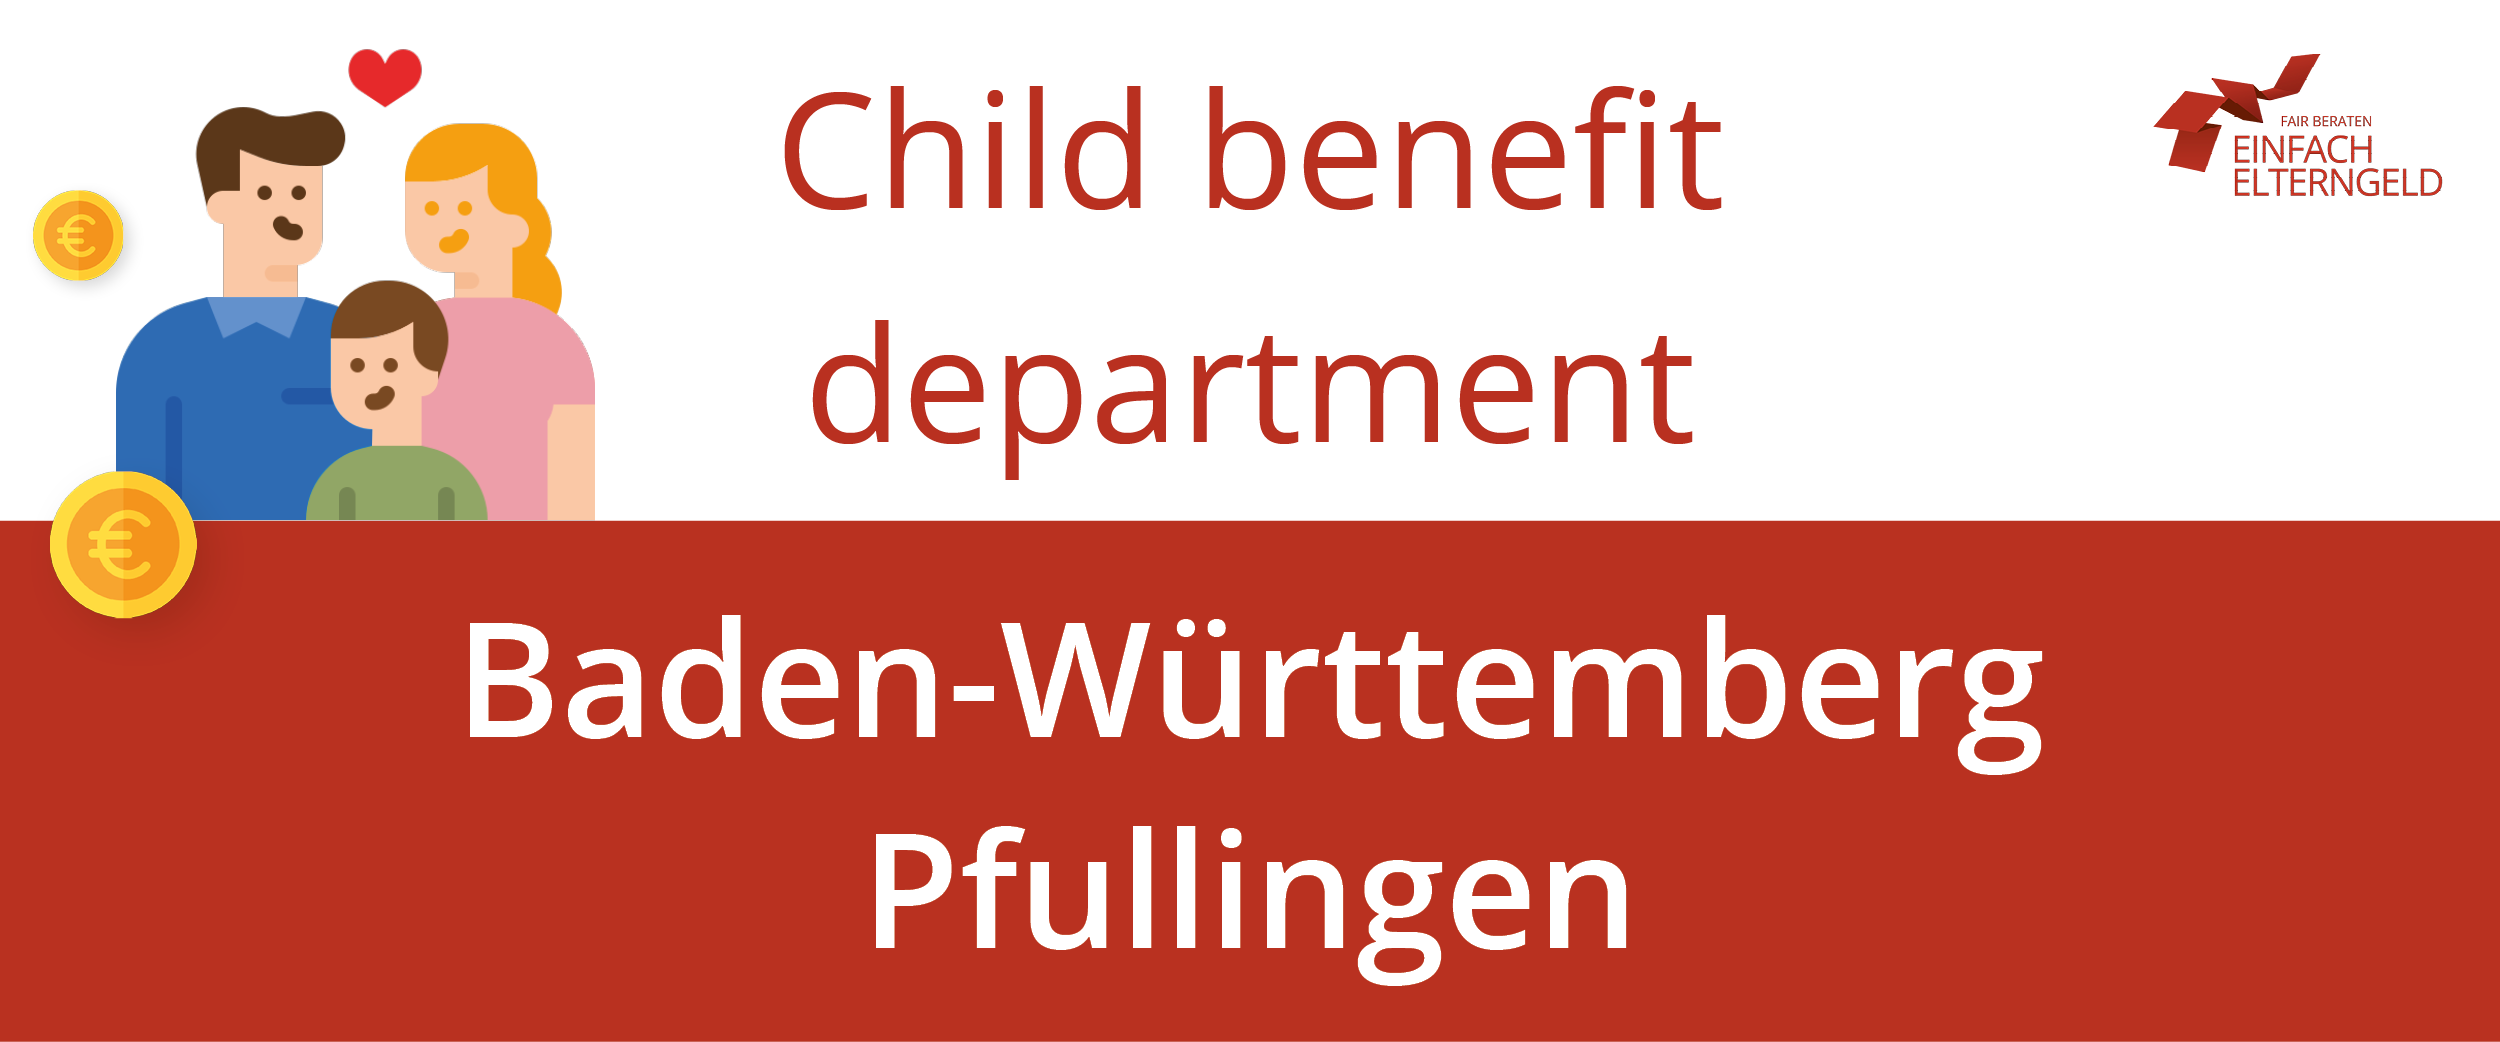 We present you the Child benefit department Baden-Württemberg Pfullingen.